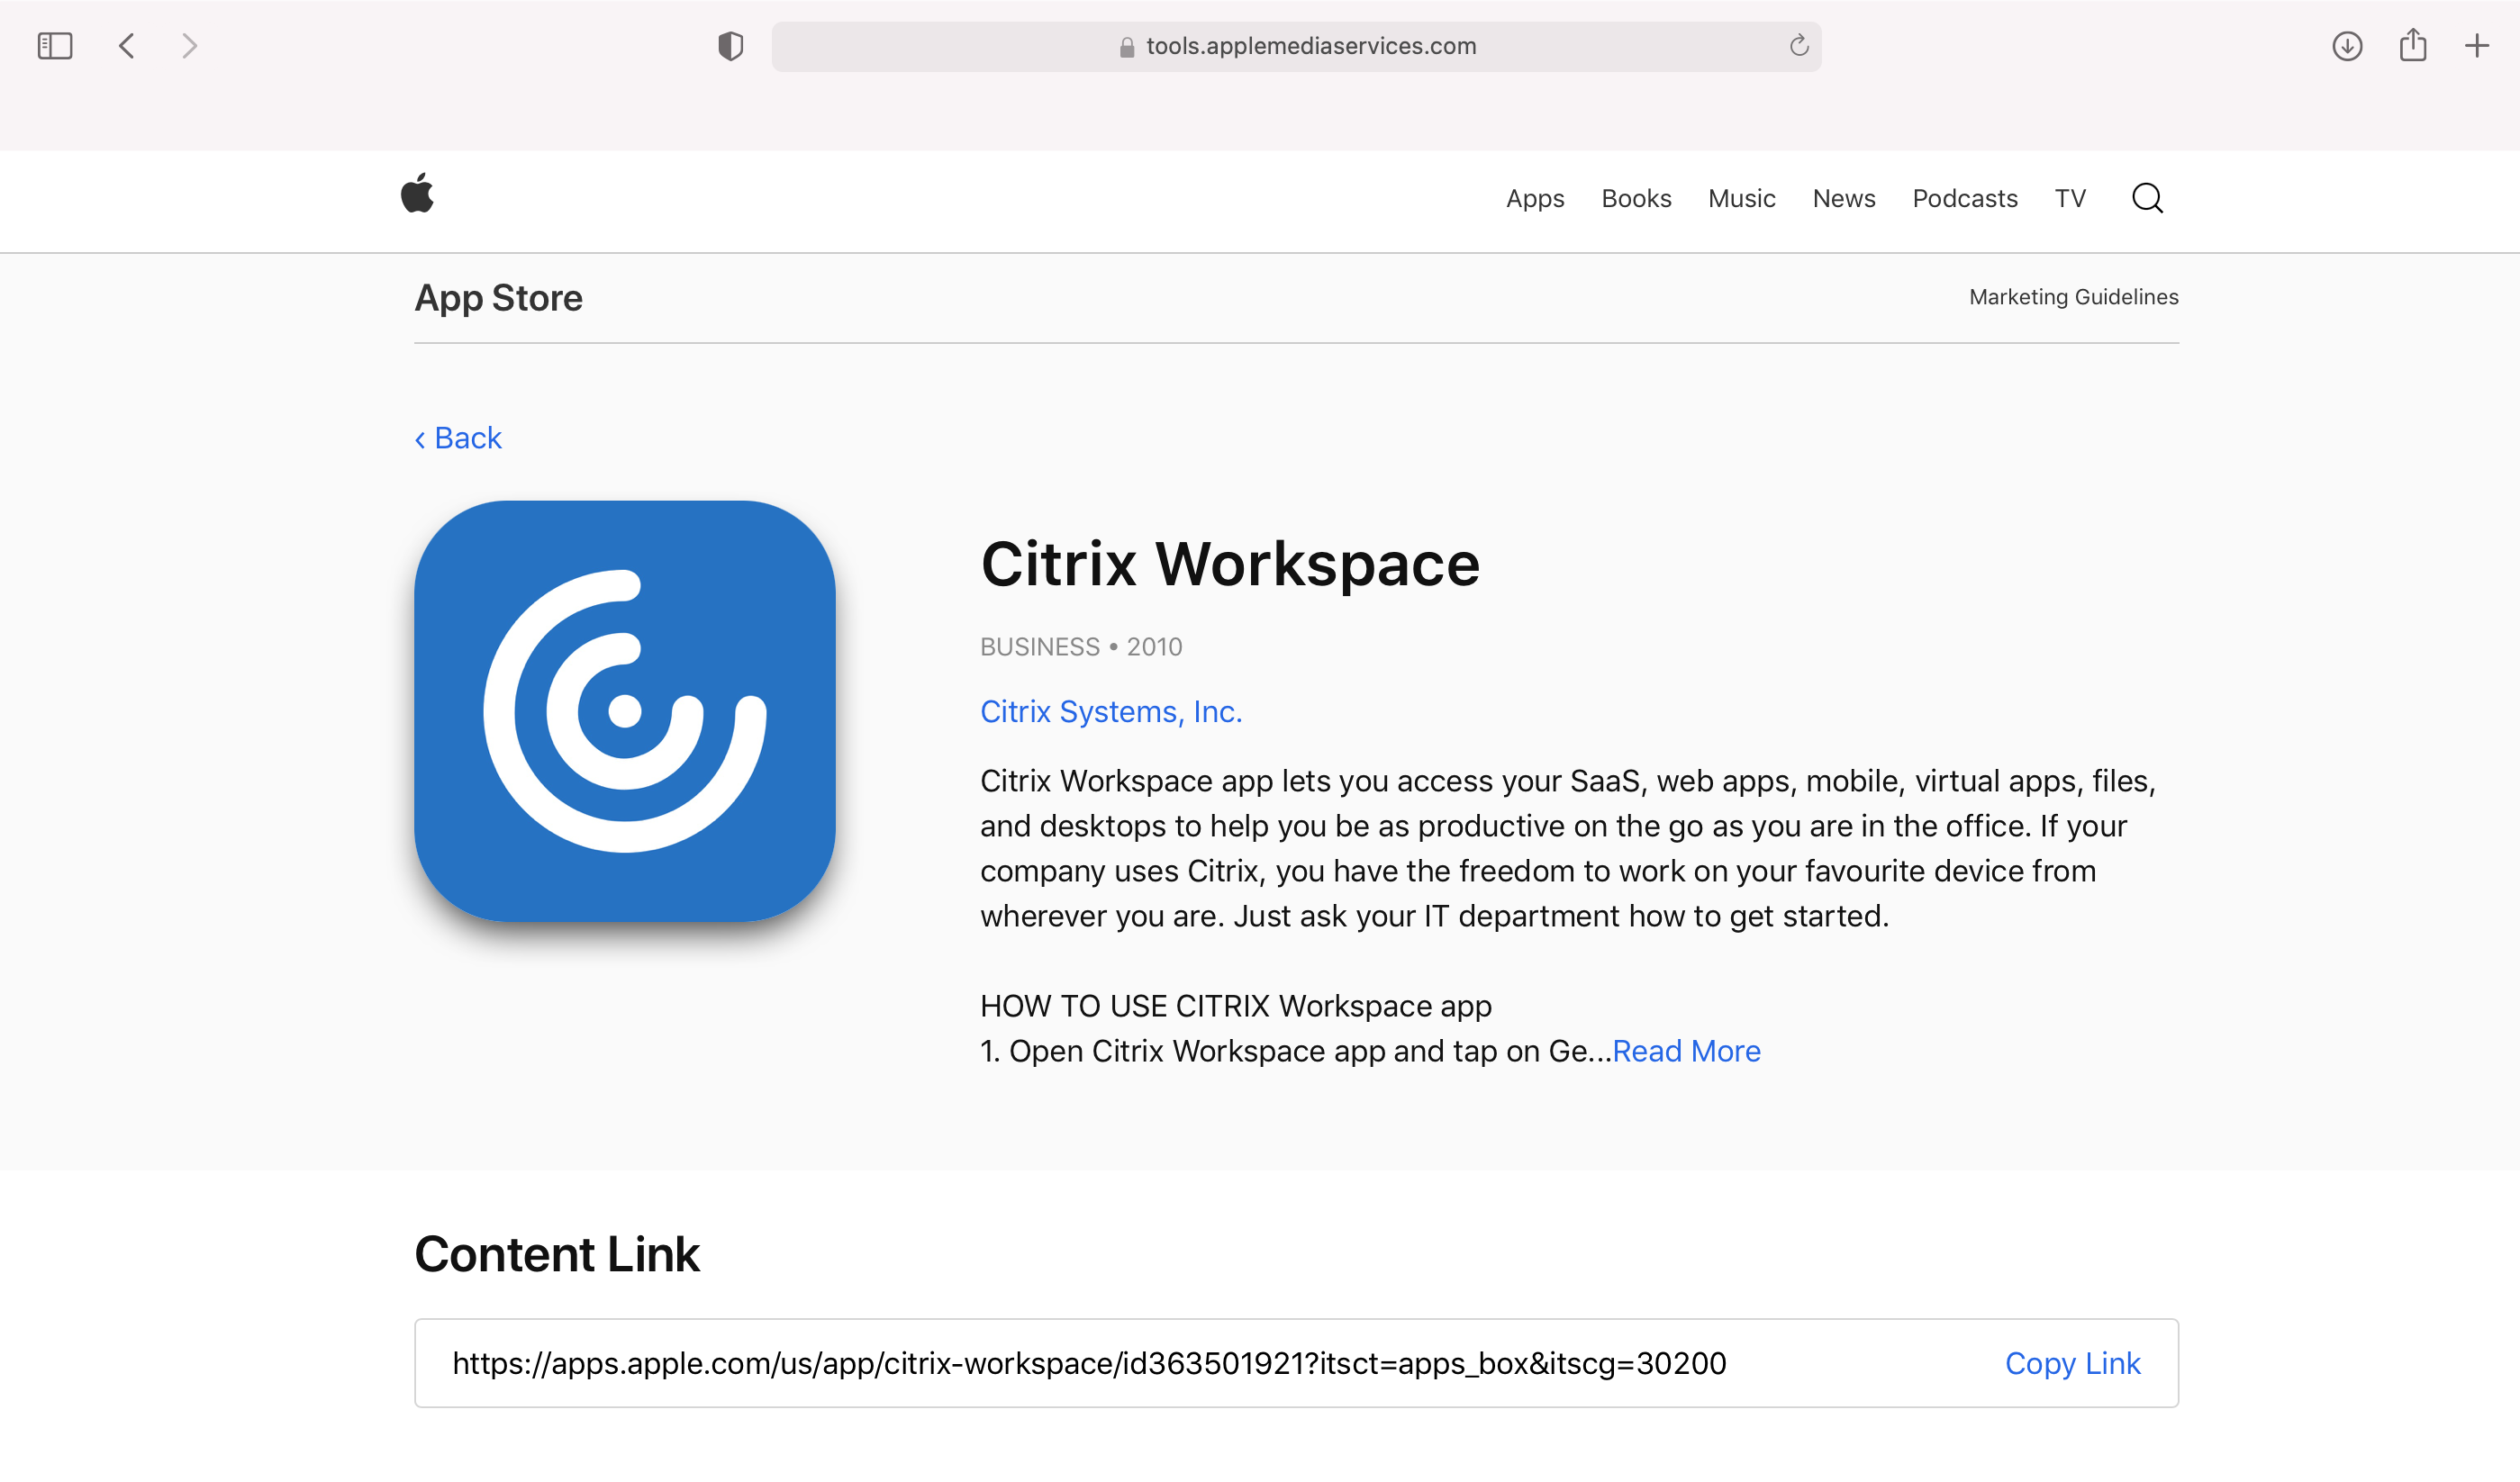 Citrix Workspace App marketing page